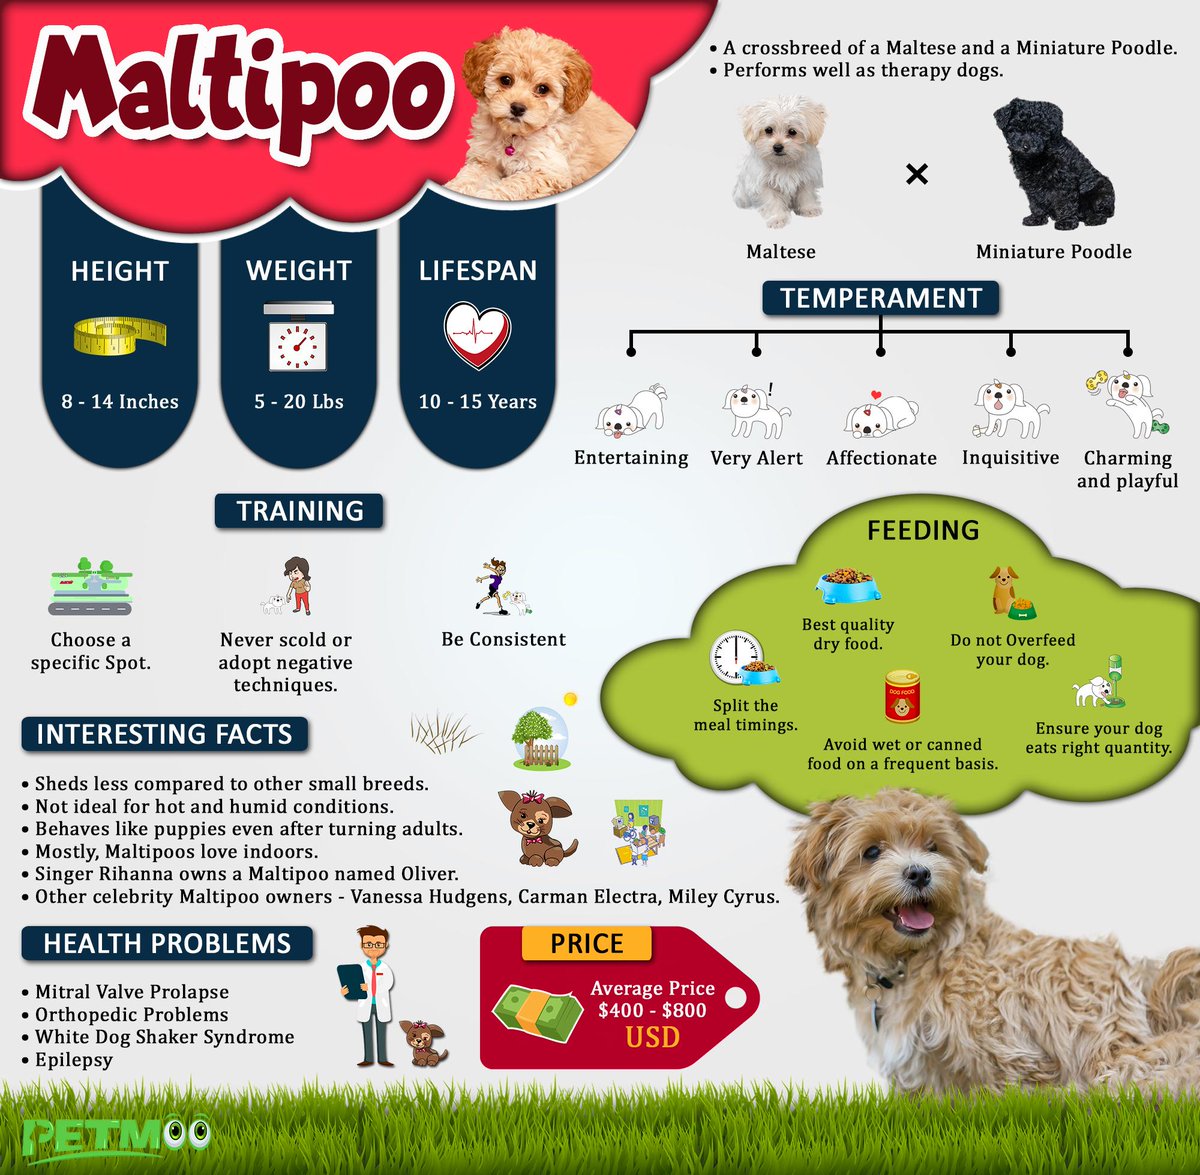 Maltipoo Infographic
#petmoo #pets #dogs #dogbreeds #doginfographic #maltipooinfographic